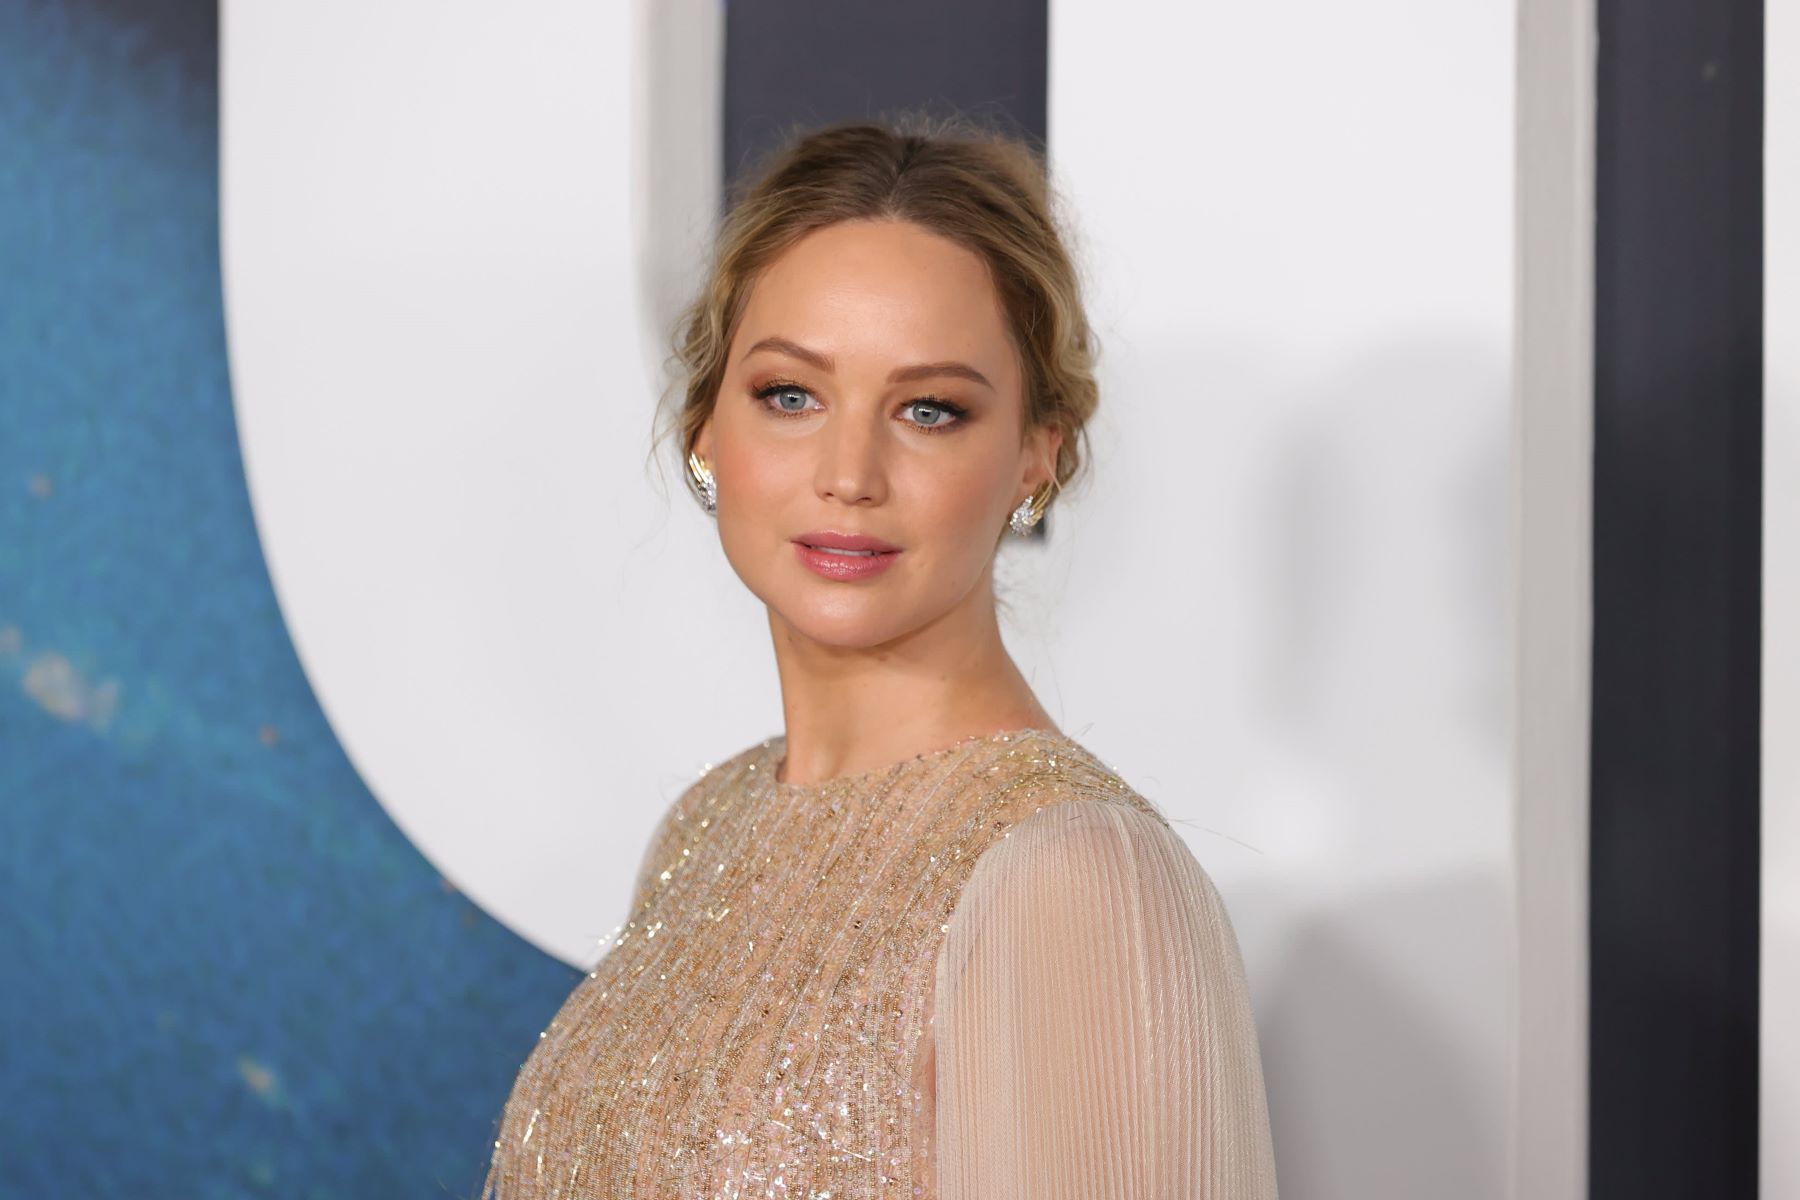 Jennifer Lawrence’s Shocking Reaction To The Harvey Weinstein Scandal